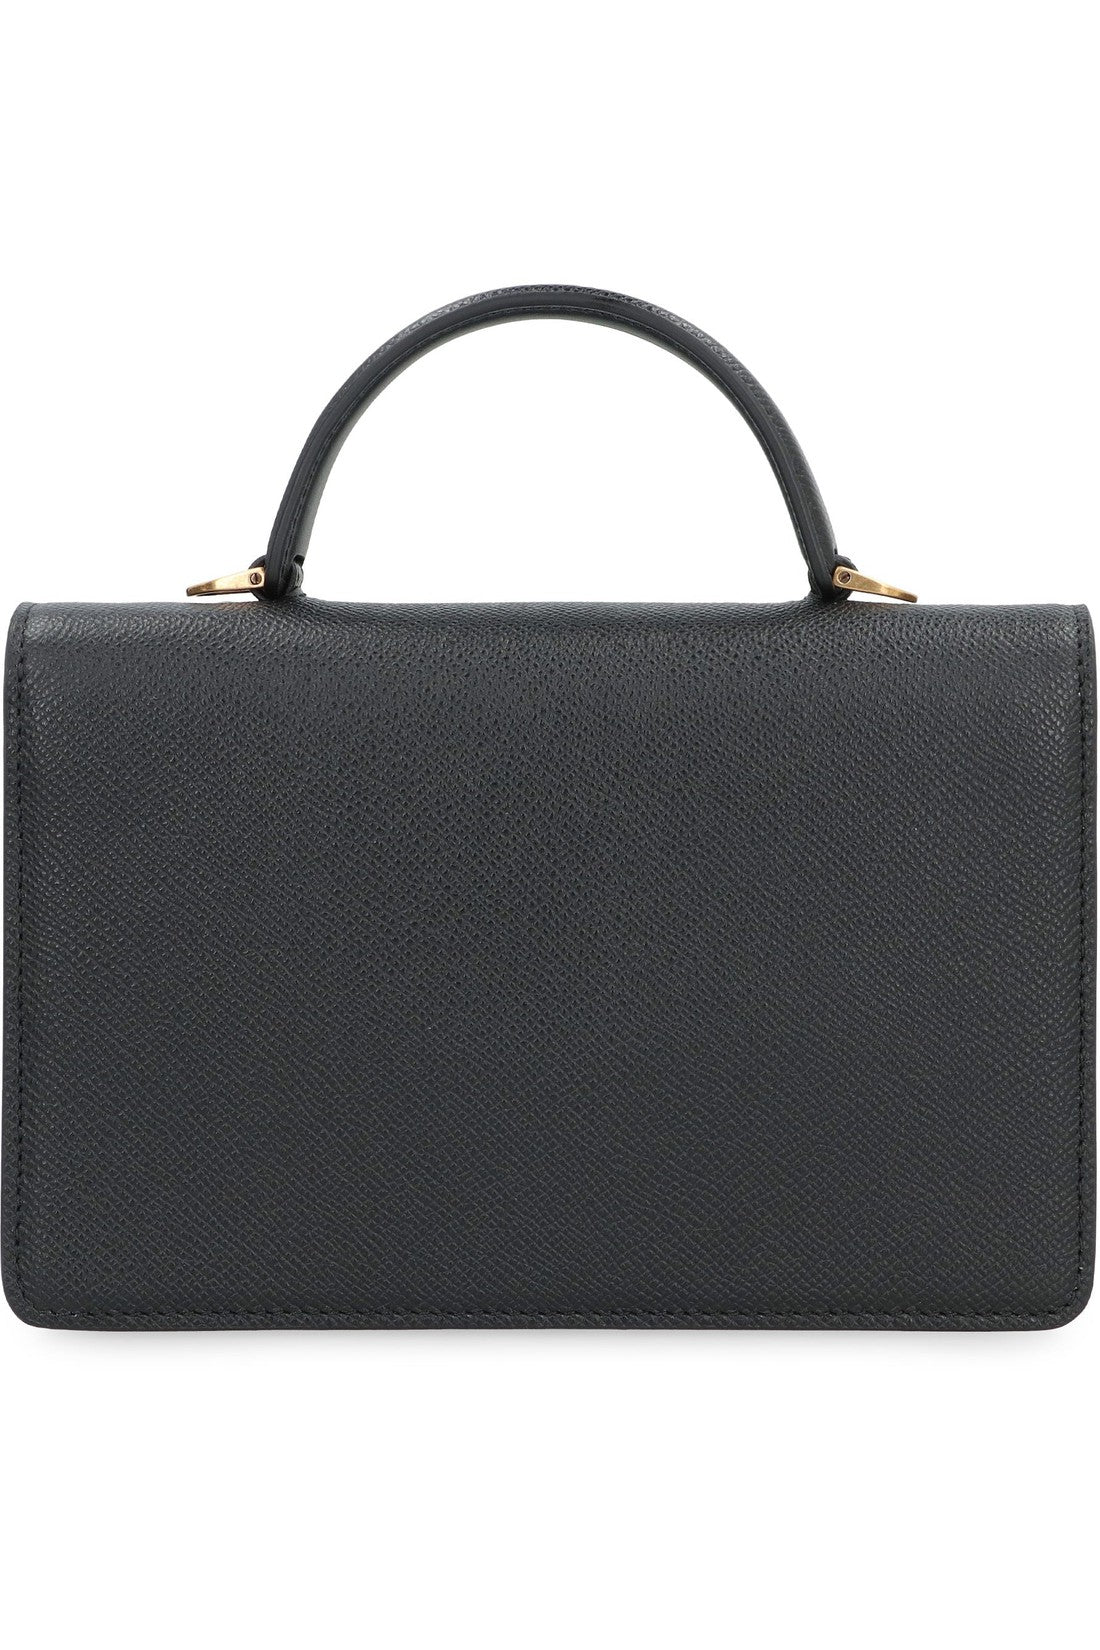 FERRAGAMO-OUTLET-SALE-Gancini leather mini handbag-ARCHIVIST